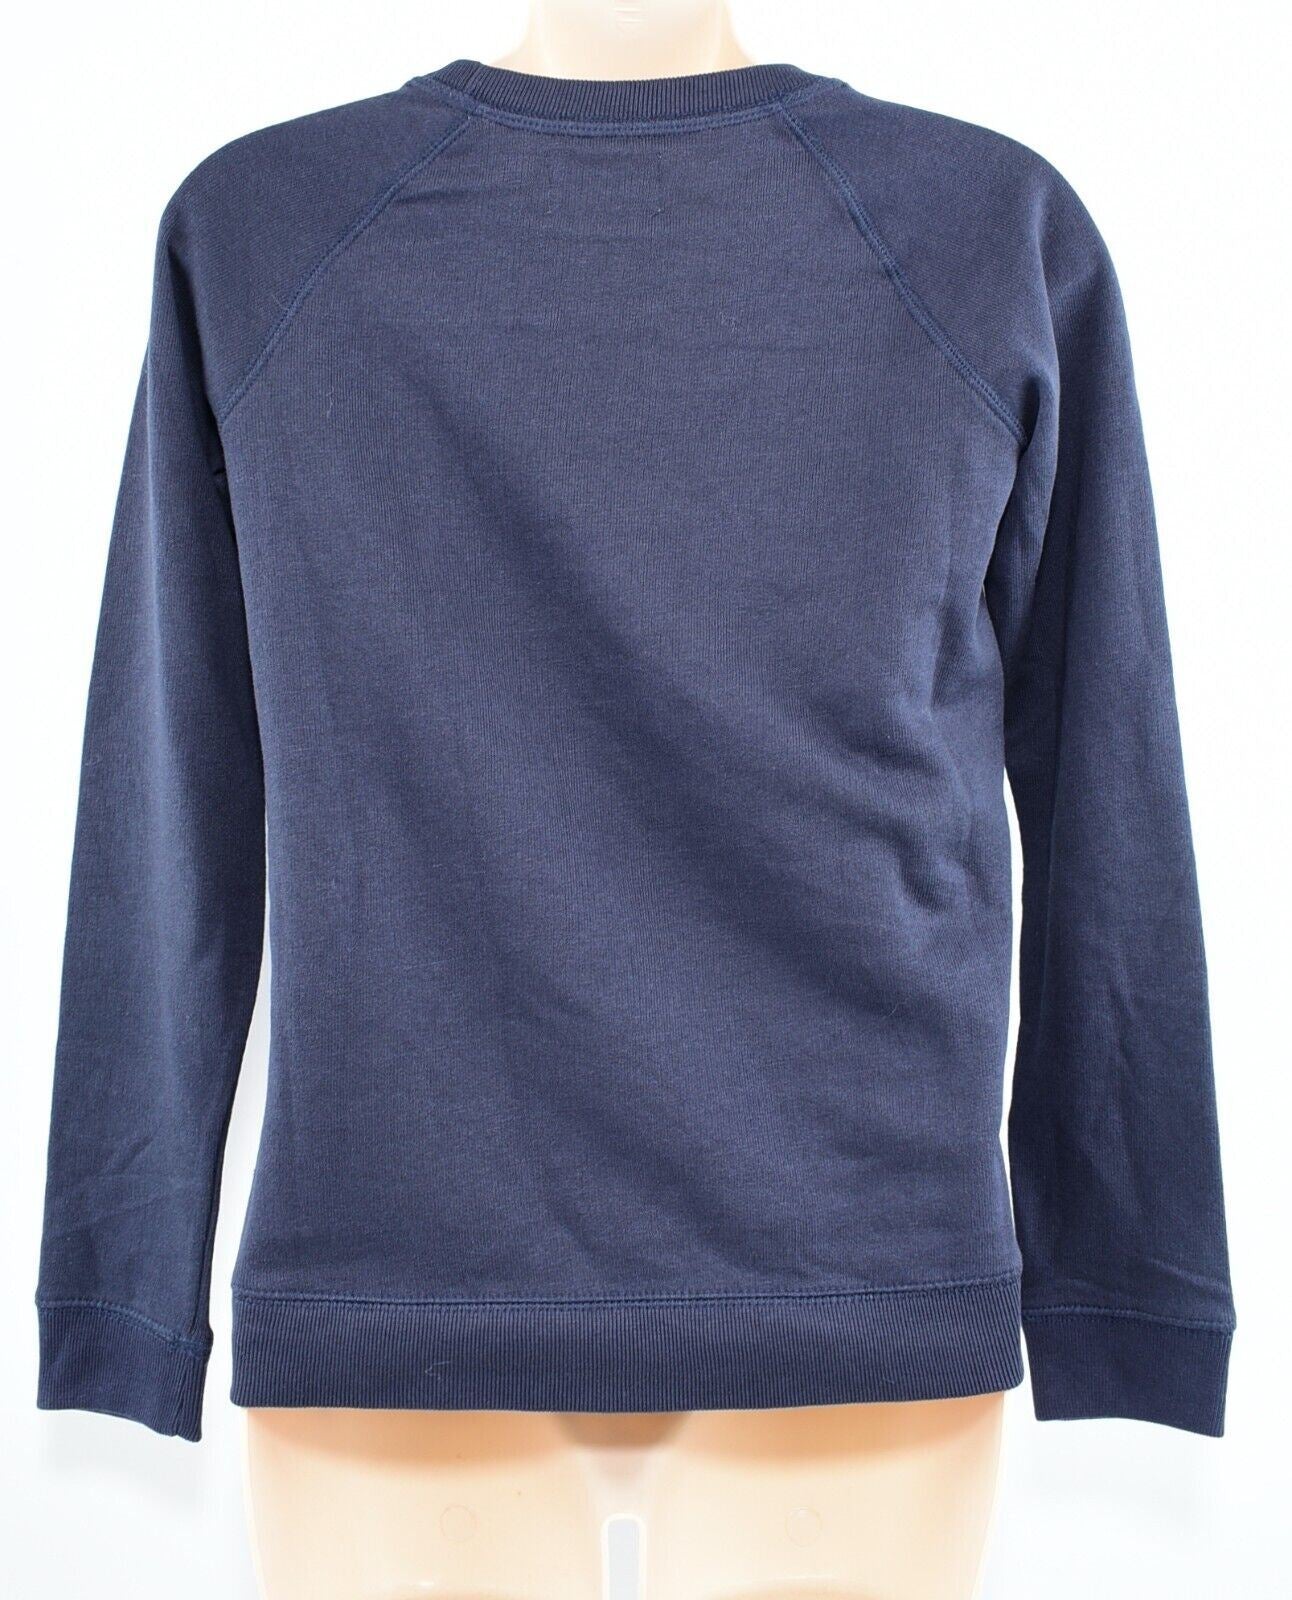 JACK WILLS Womens COLBY Sweatshirt, Navy Blue, size 2XS /UK 6